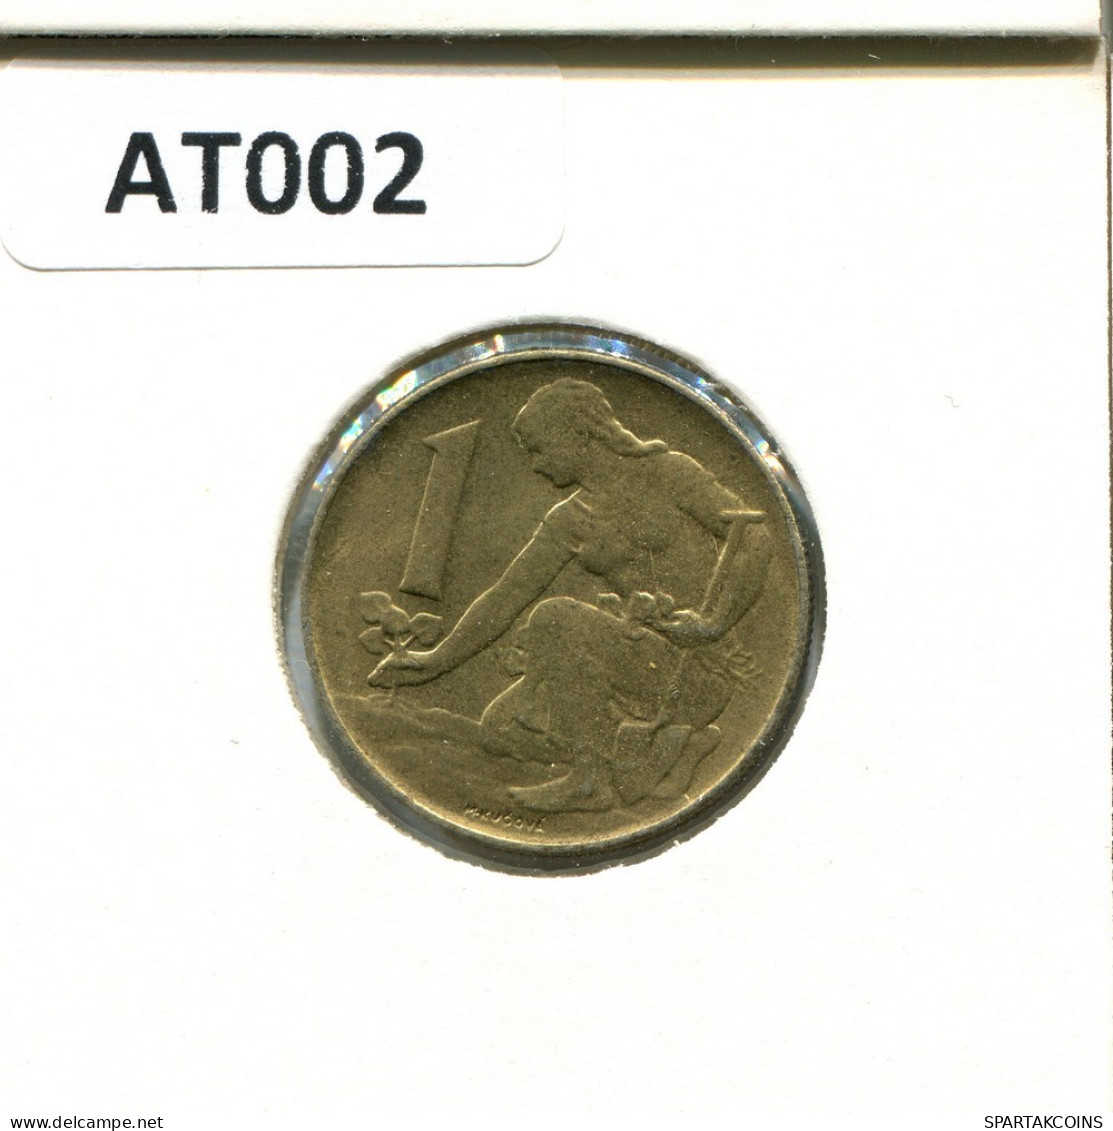 1 KORUNA 1992 CZECHOSLOVAKIA Coin #AT002.U.A - Czechoslovakia